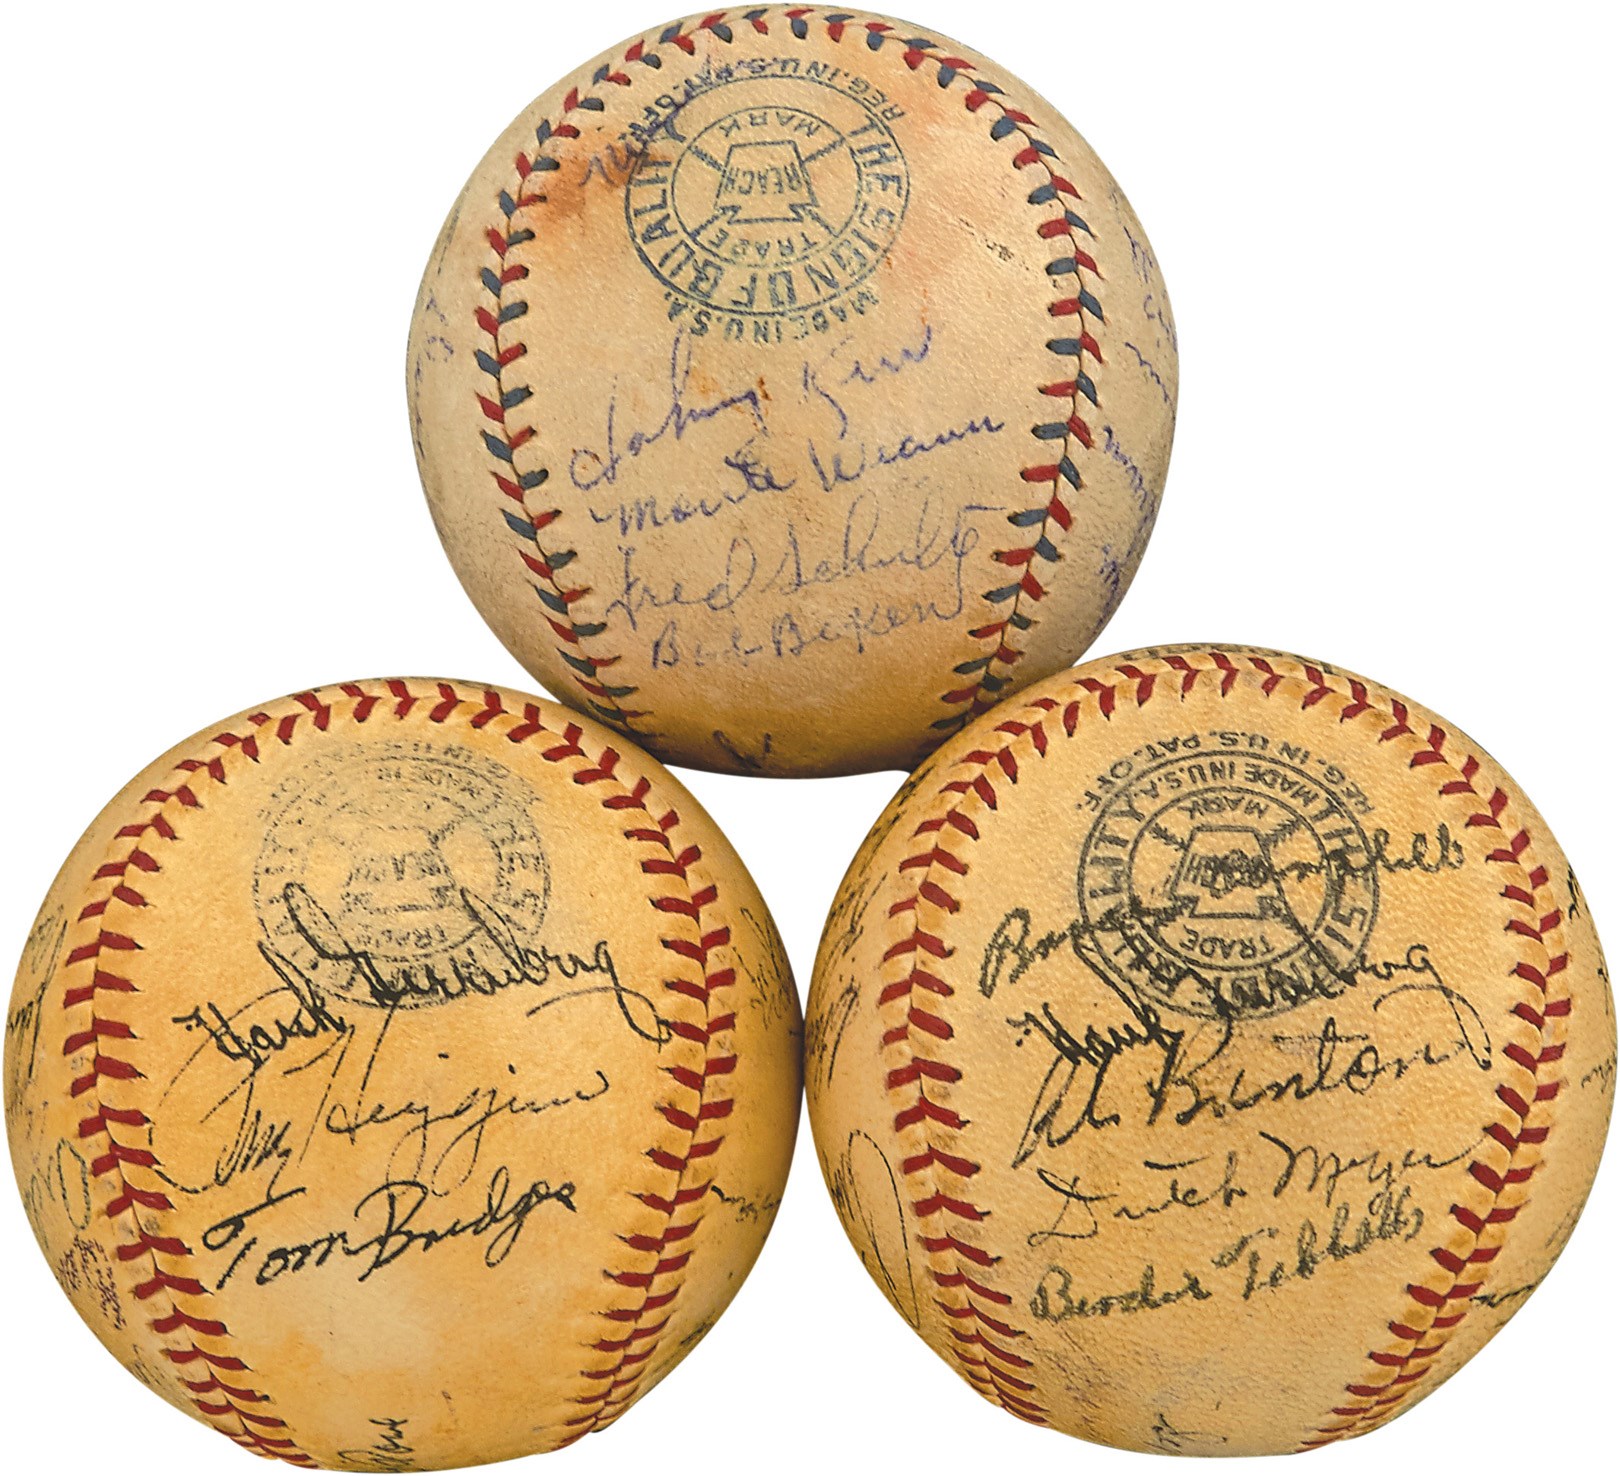 Baseball Autographs - Trio of 1933 & 1940 World Series Team-Signed Baseballs (All PSA or JSA)